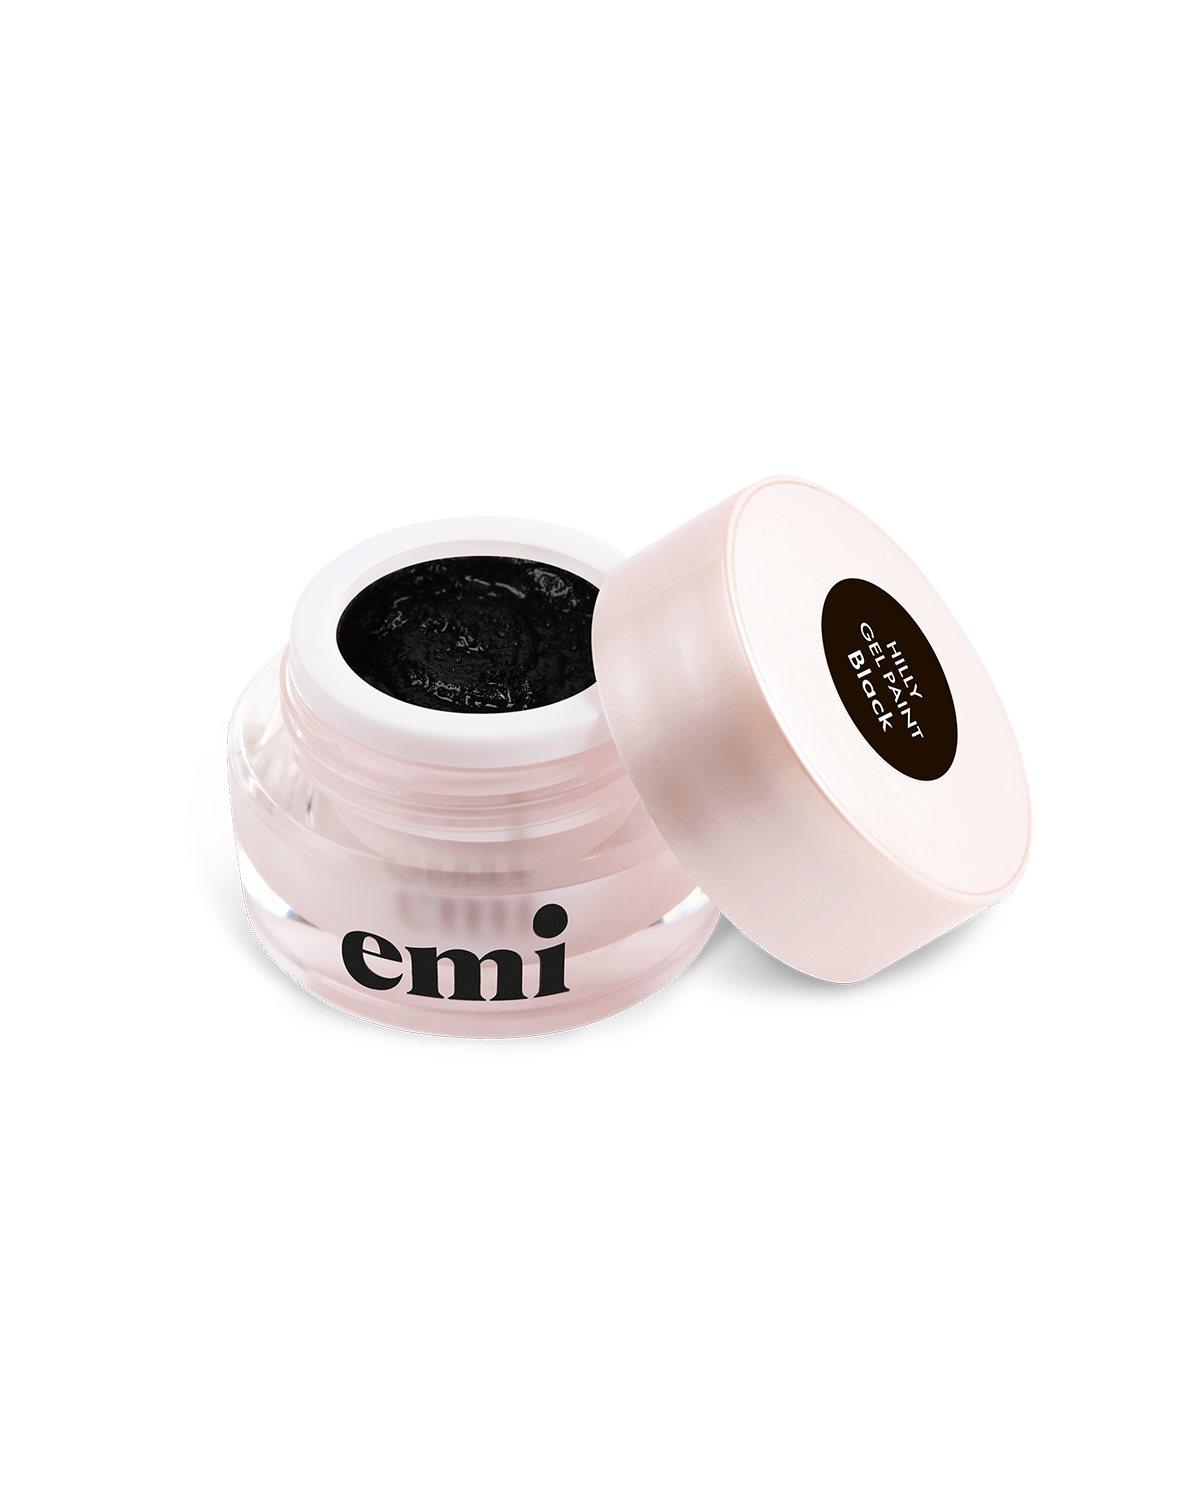 Гель для дизайна ногтей Emi Hilly gel paint №001 Black 5 г объемные наклейки для дизайна ногтей emi charmicon 3d silicone stickers 244 oh la la